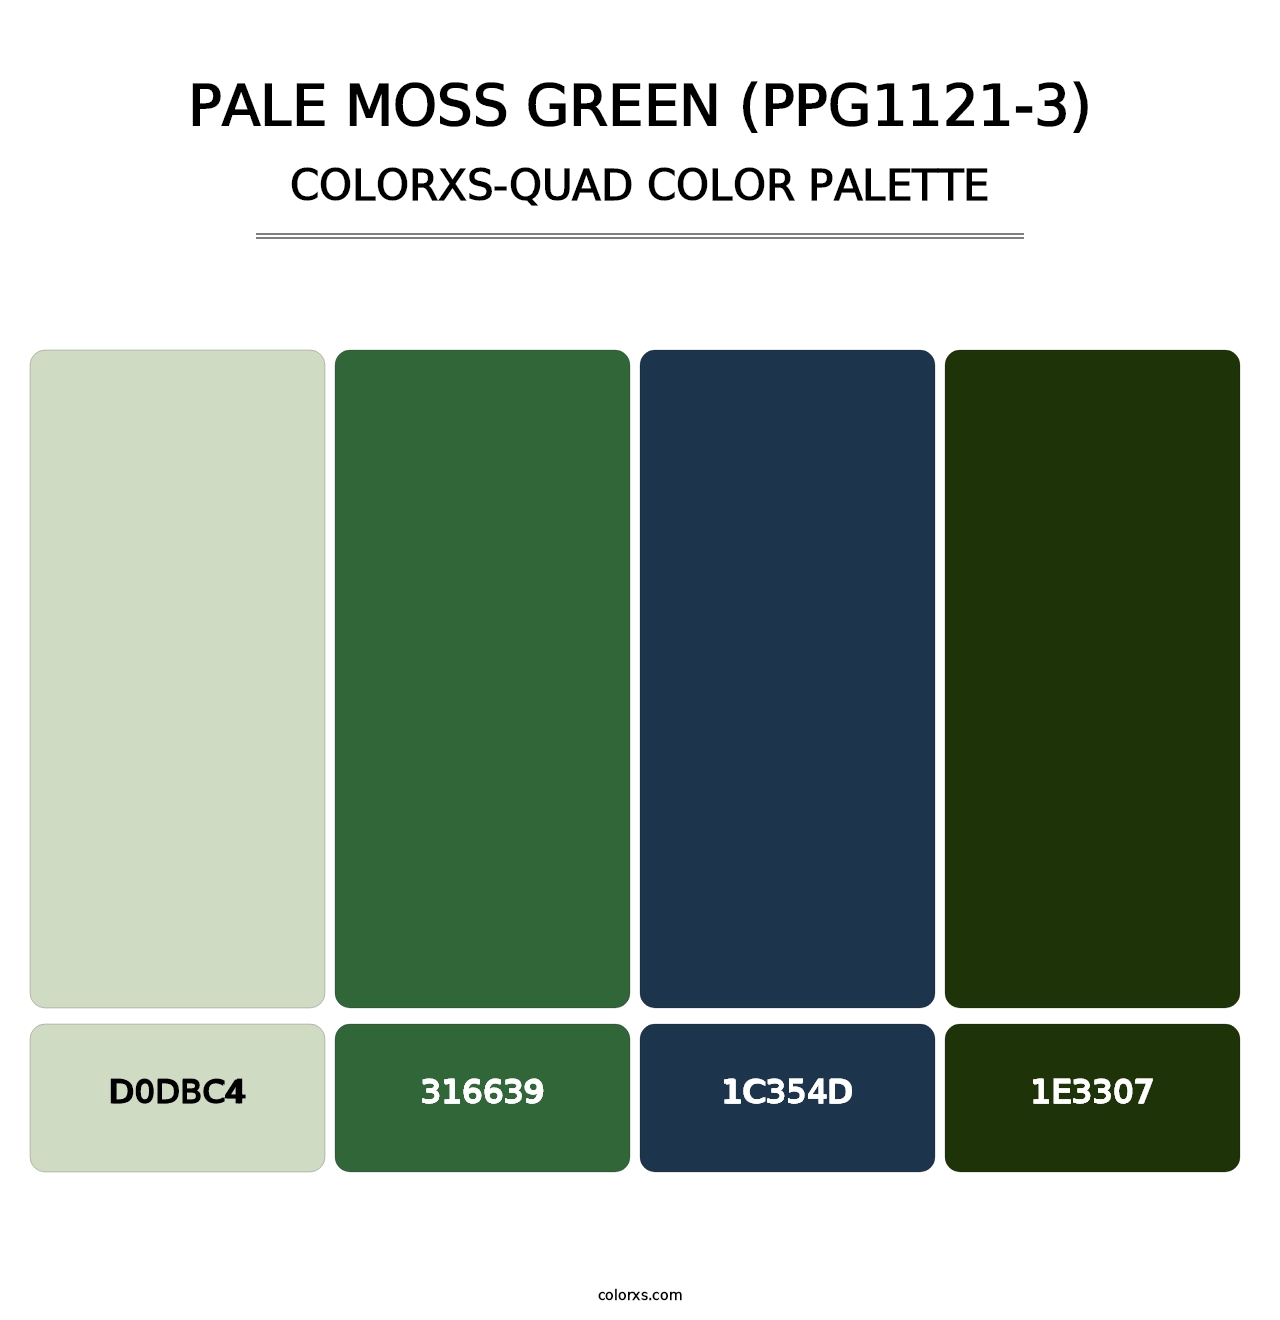 Pale Moss Green (PPG1121-3) - Colorxs Quad Palette